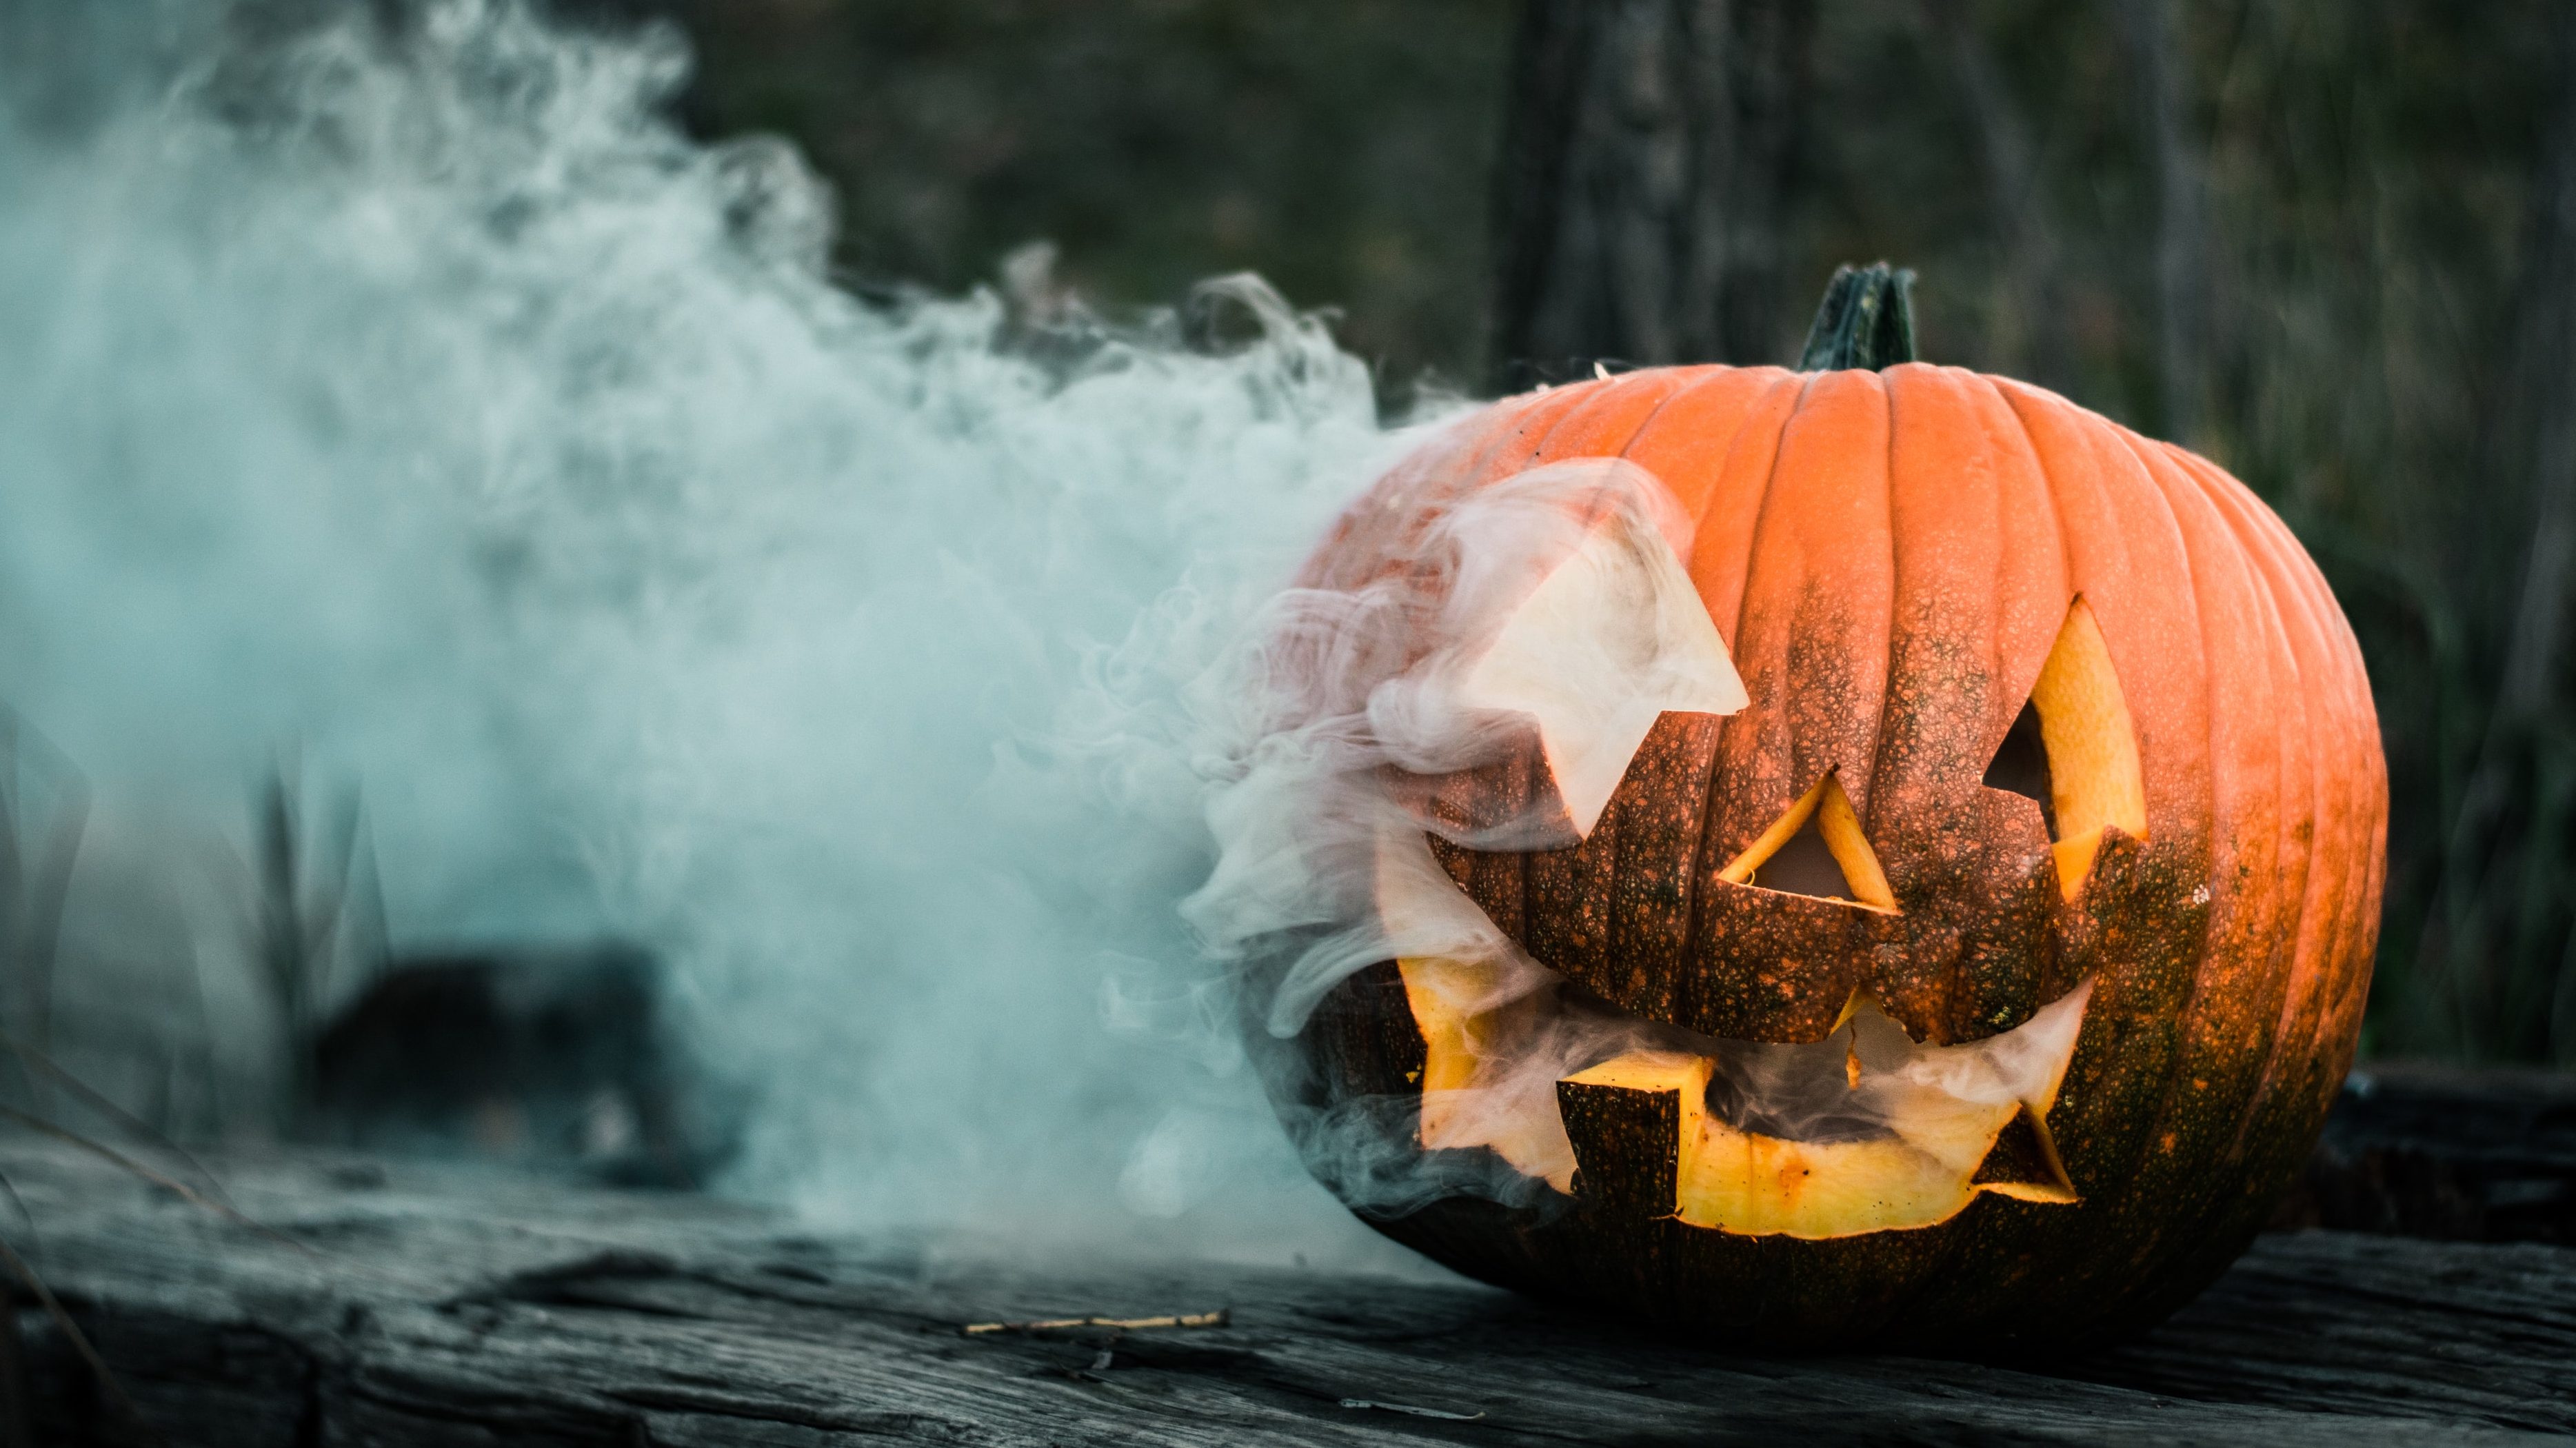 A smoking pumpkin depicting how Halloween became a dangerous holiday